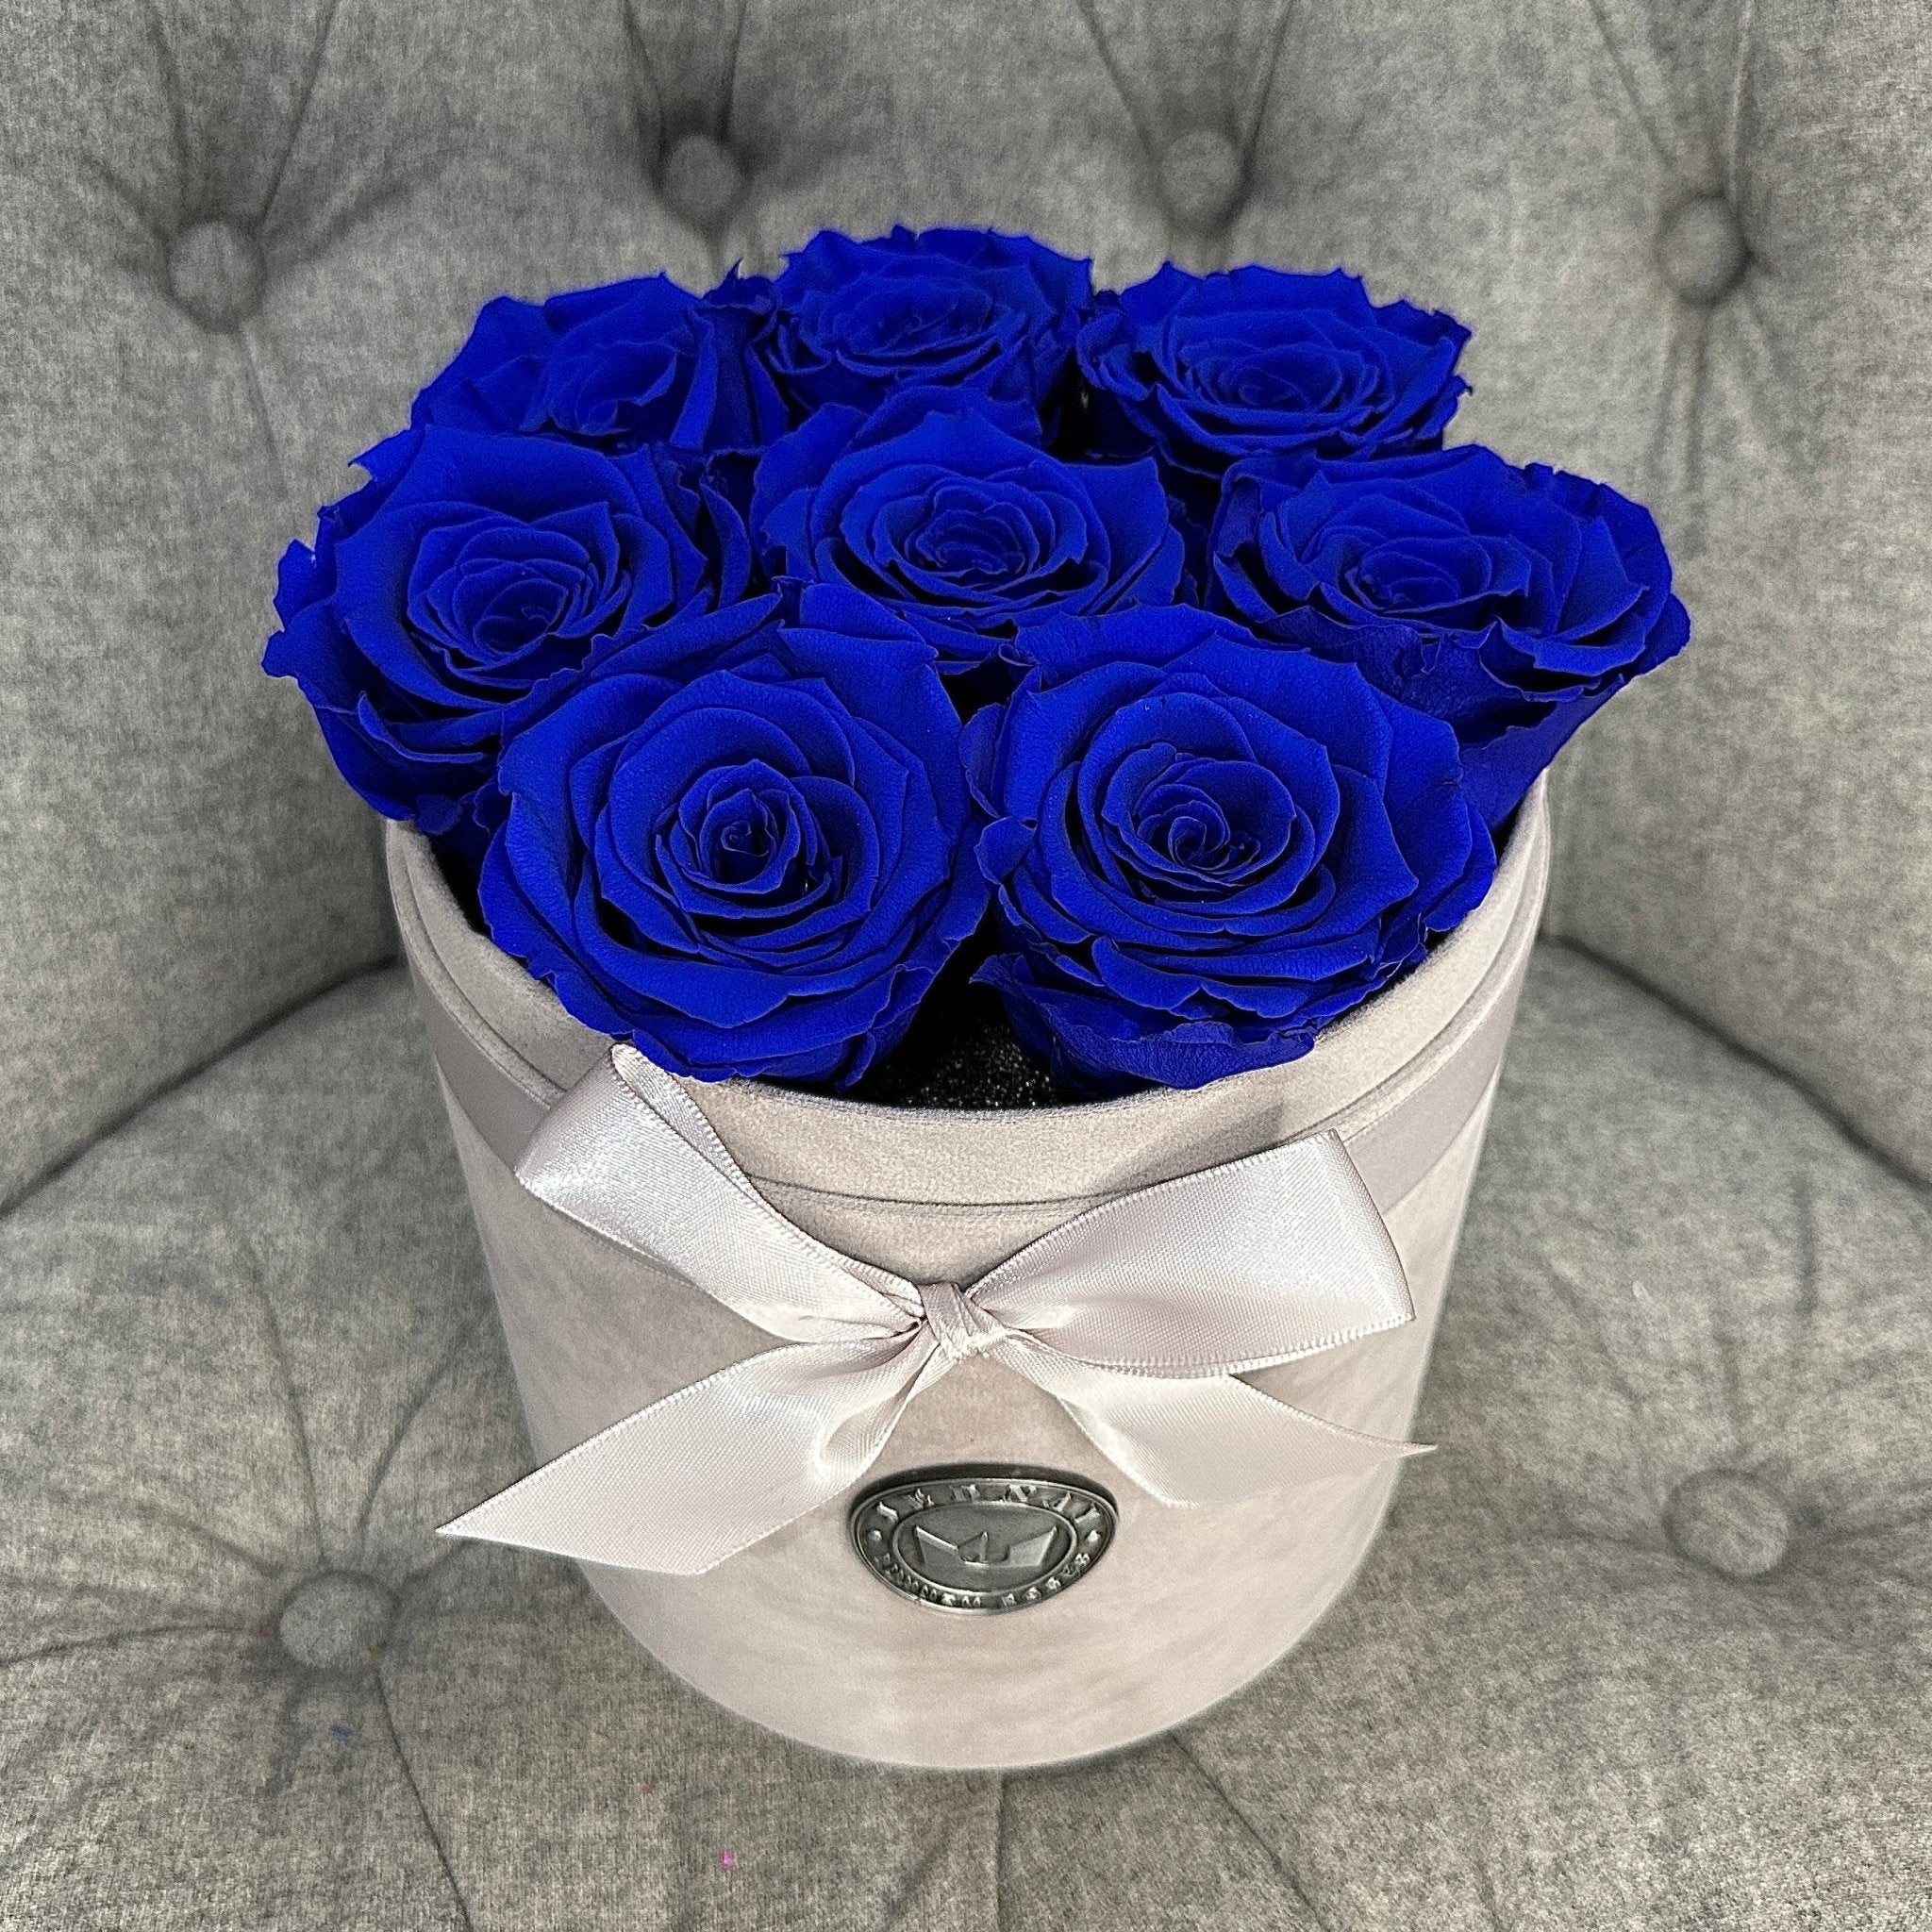 Medium Grey Suede Forever Rose Box - Deep Blue Sea Eternal Roses - Jednay Roses